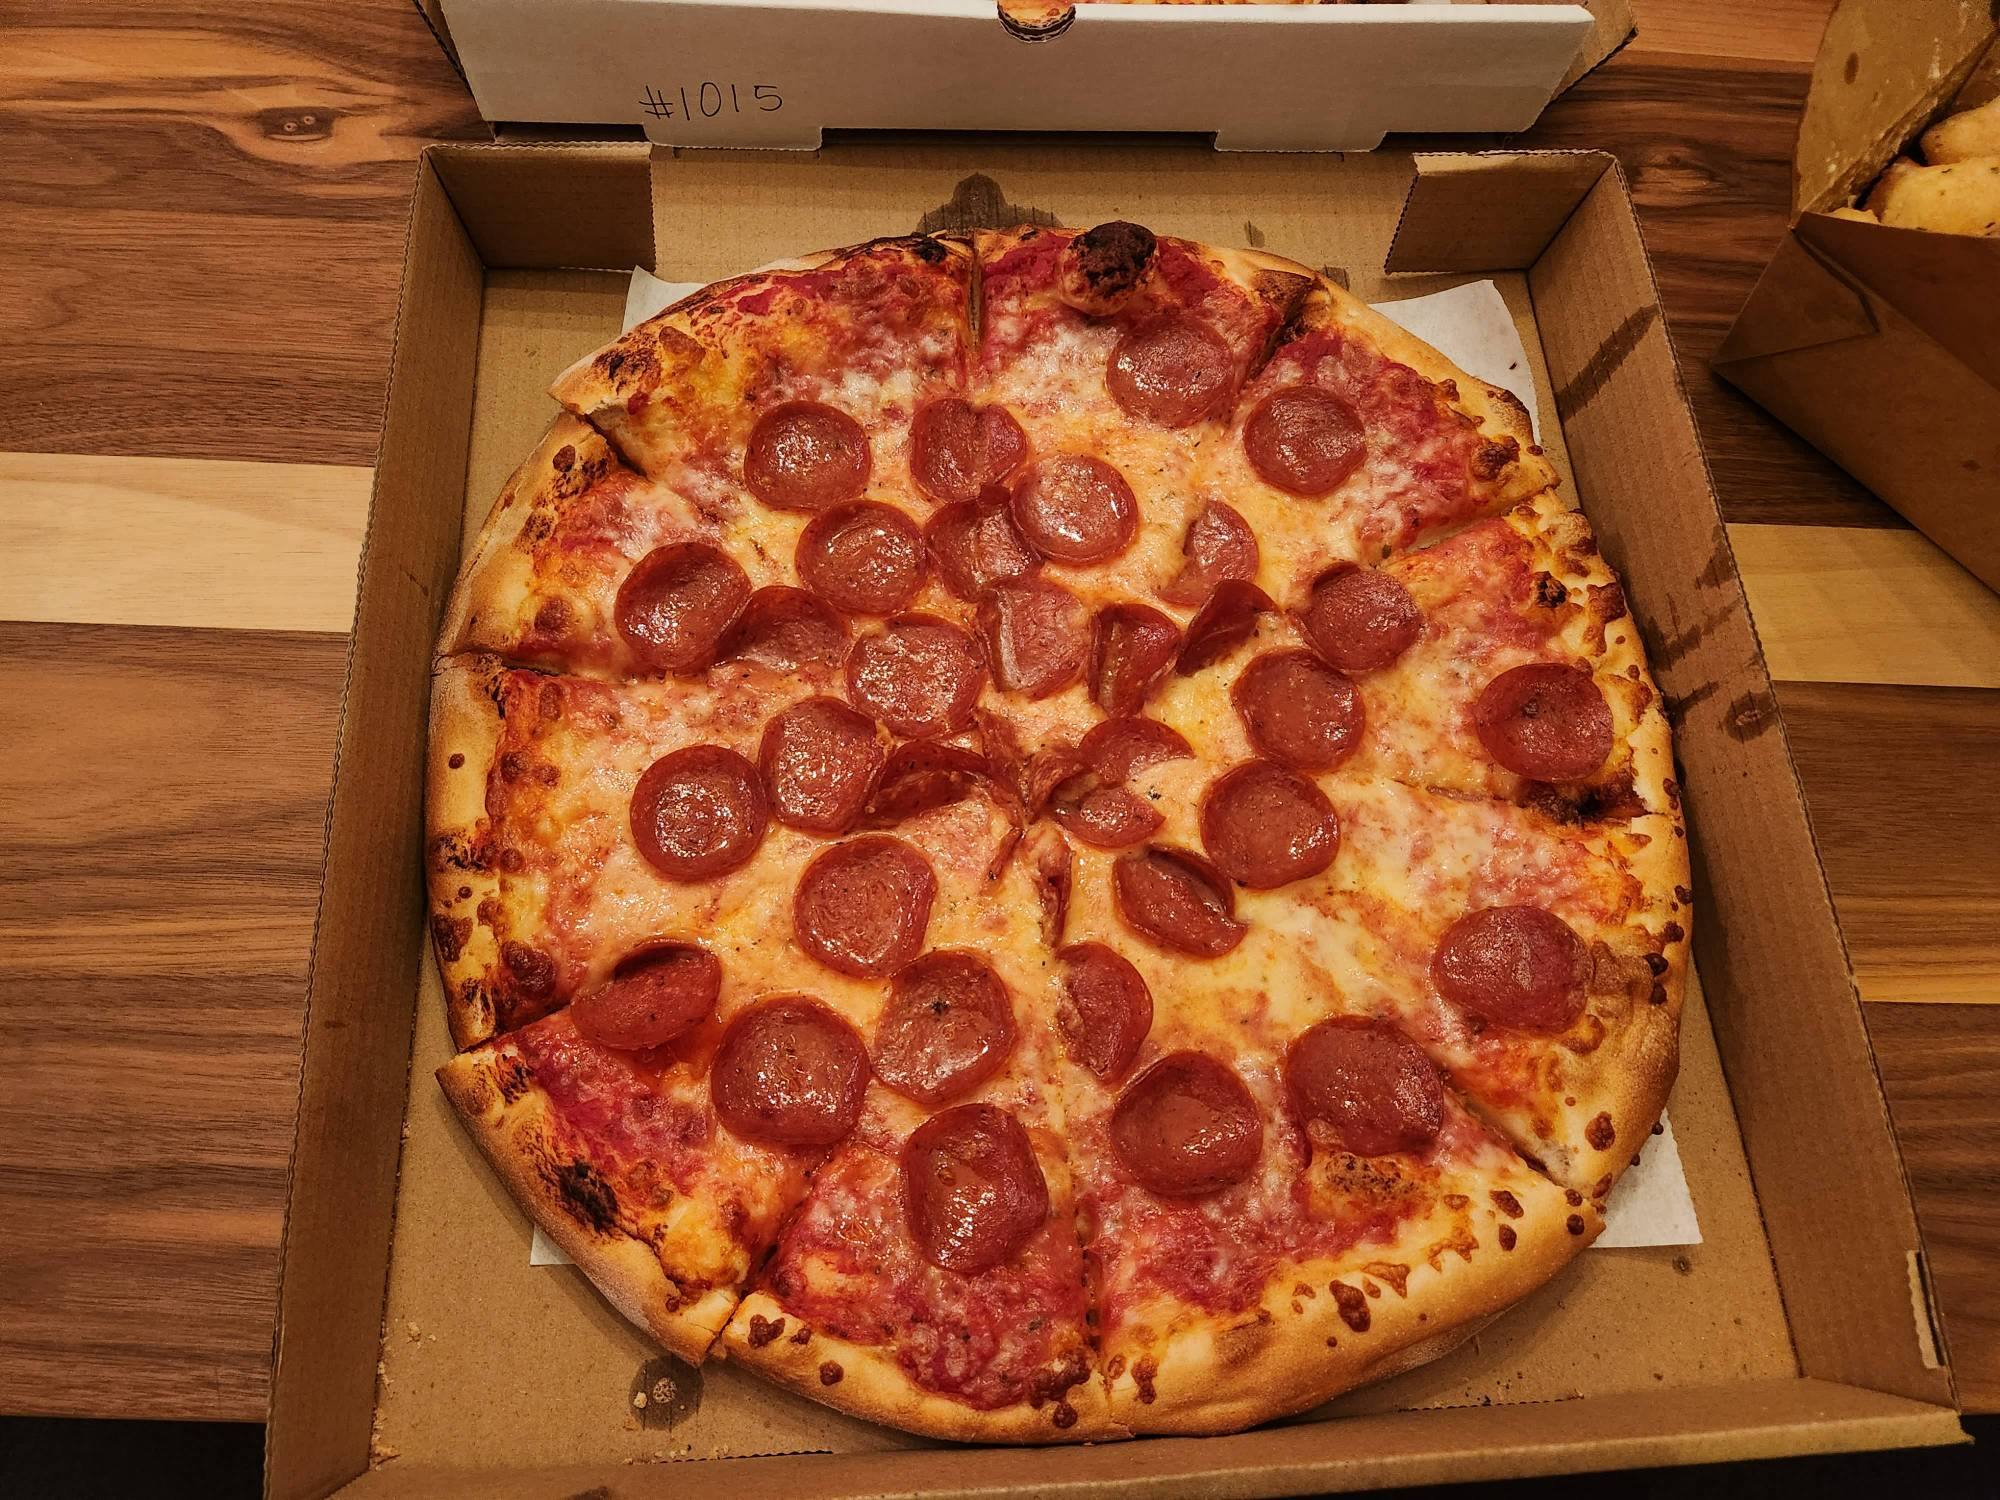 Red Baron Pizza (@redbaronpizza) • Instagram photos and videos